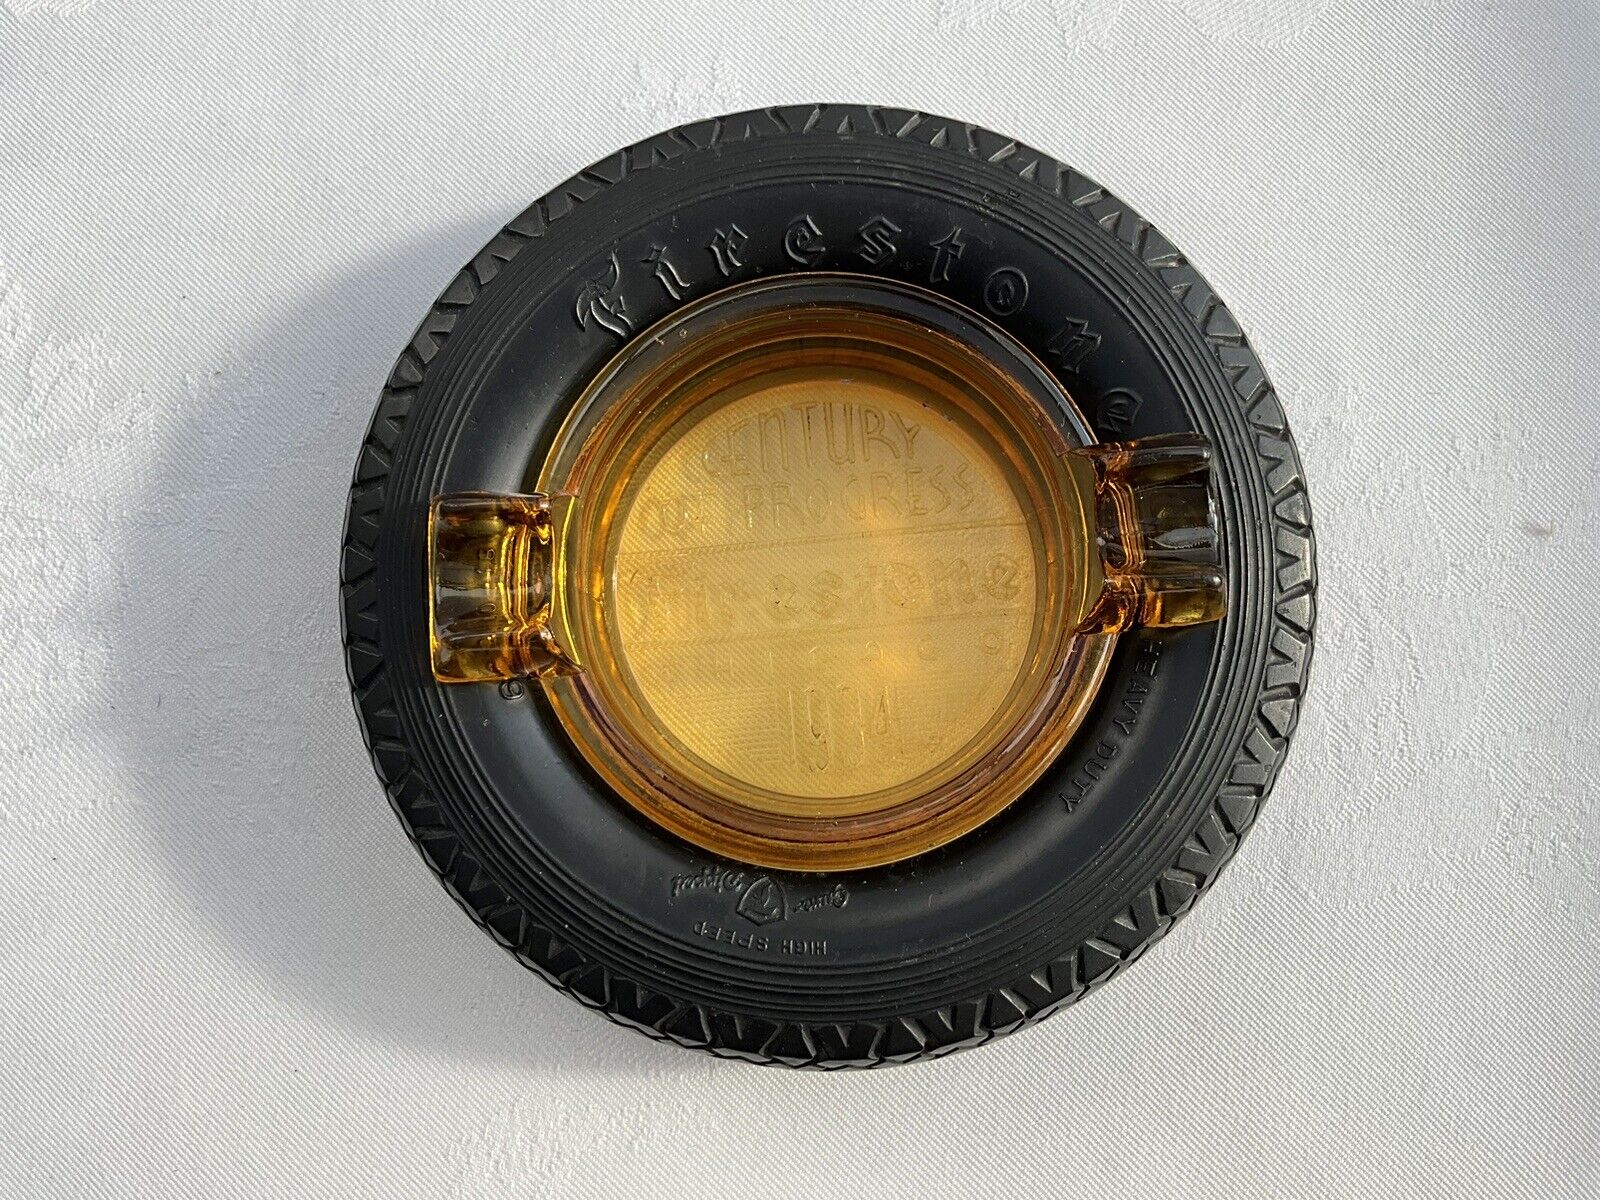 Firestone Tire Amber Glass Ashtray 1934 CENTURY OF PROGRESS Chicago World\'s Fair